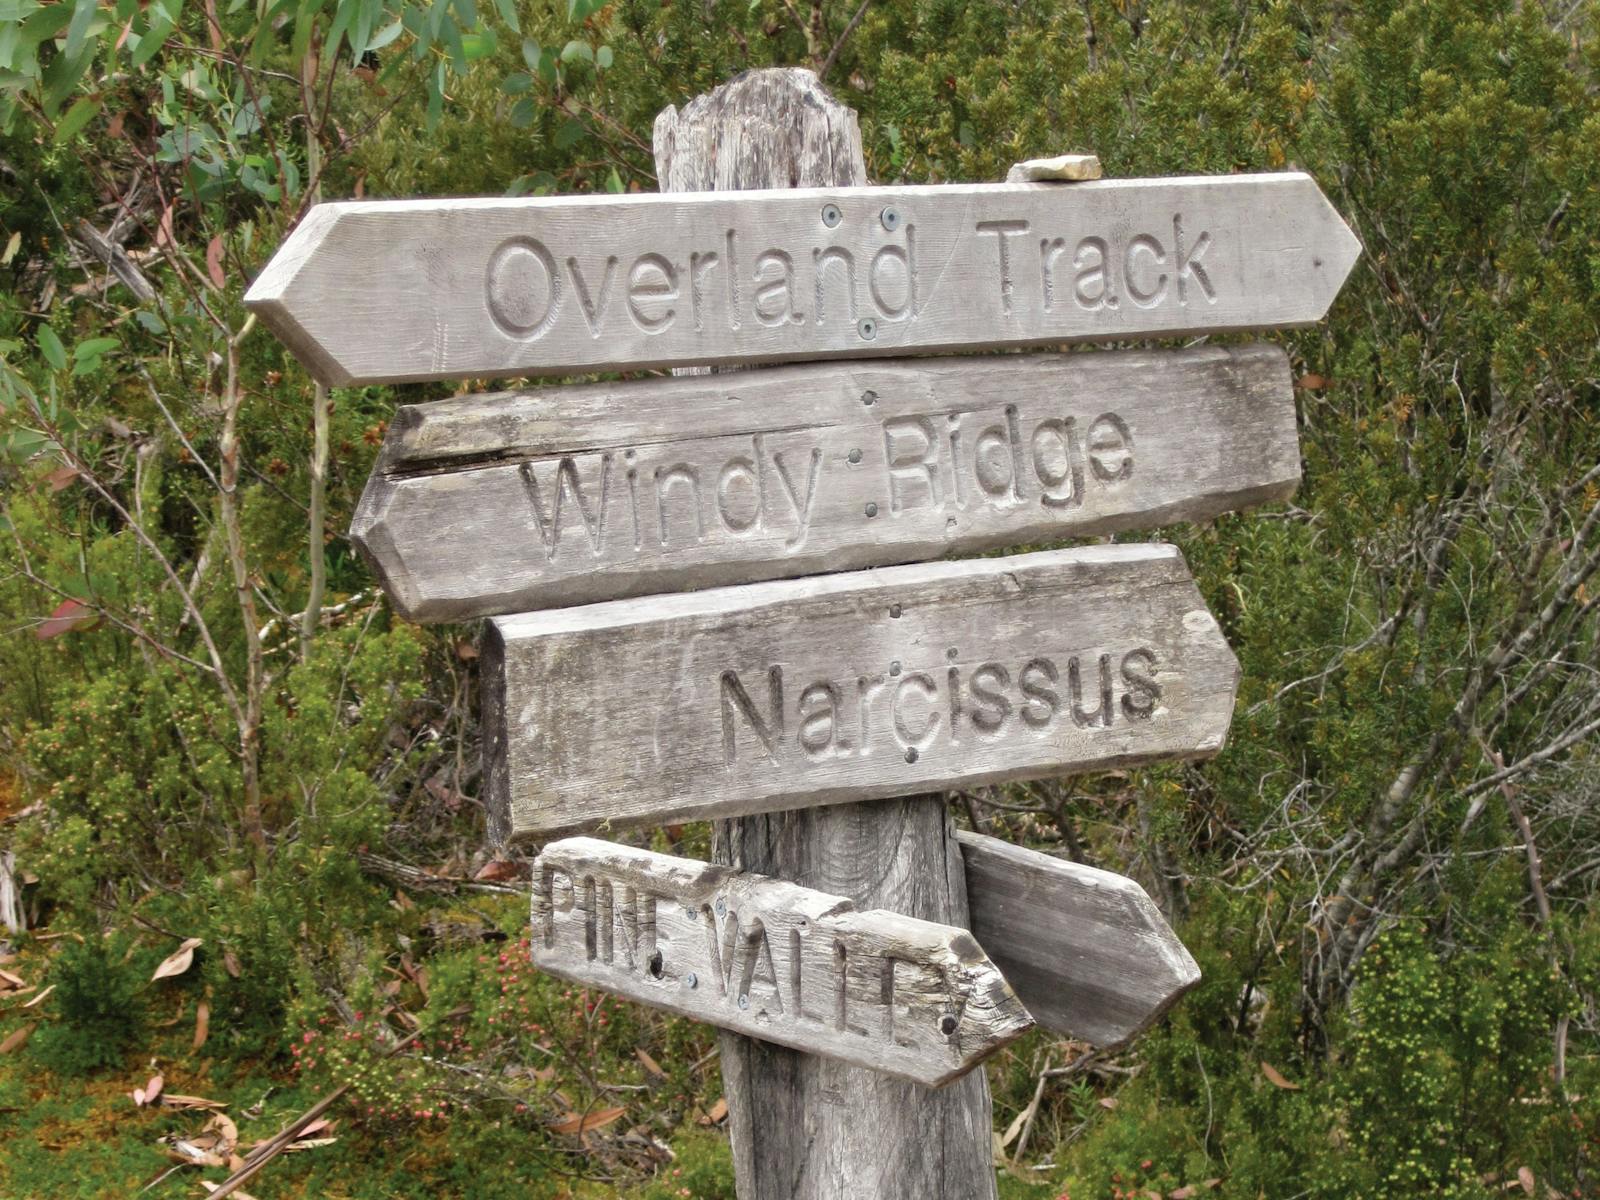 Overland Track transfers